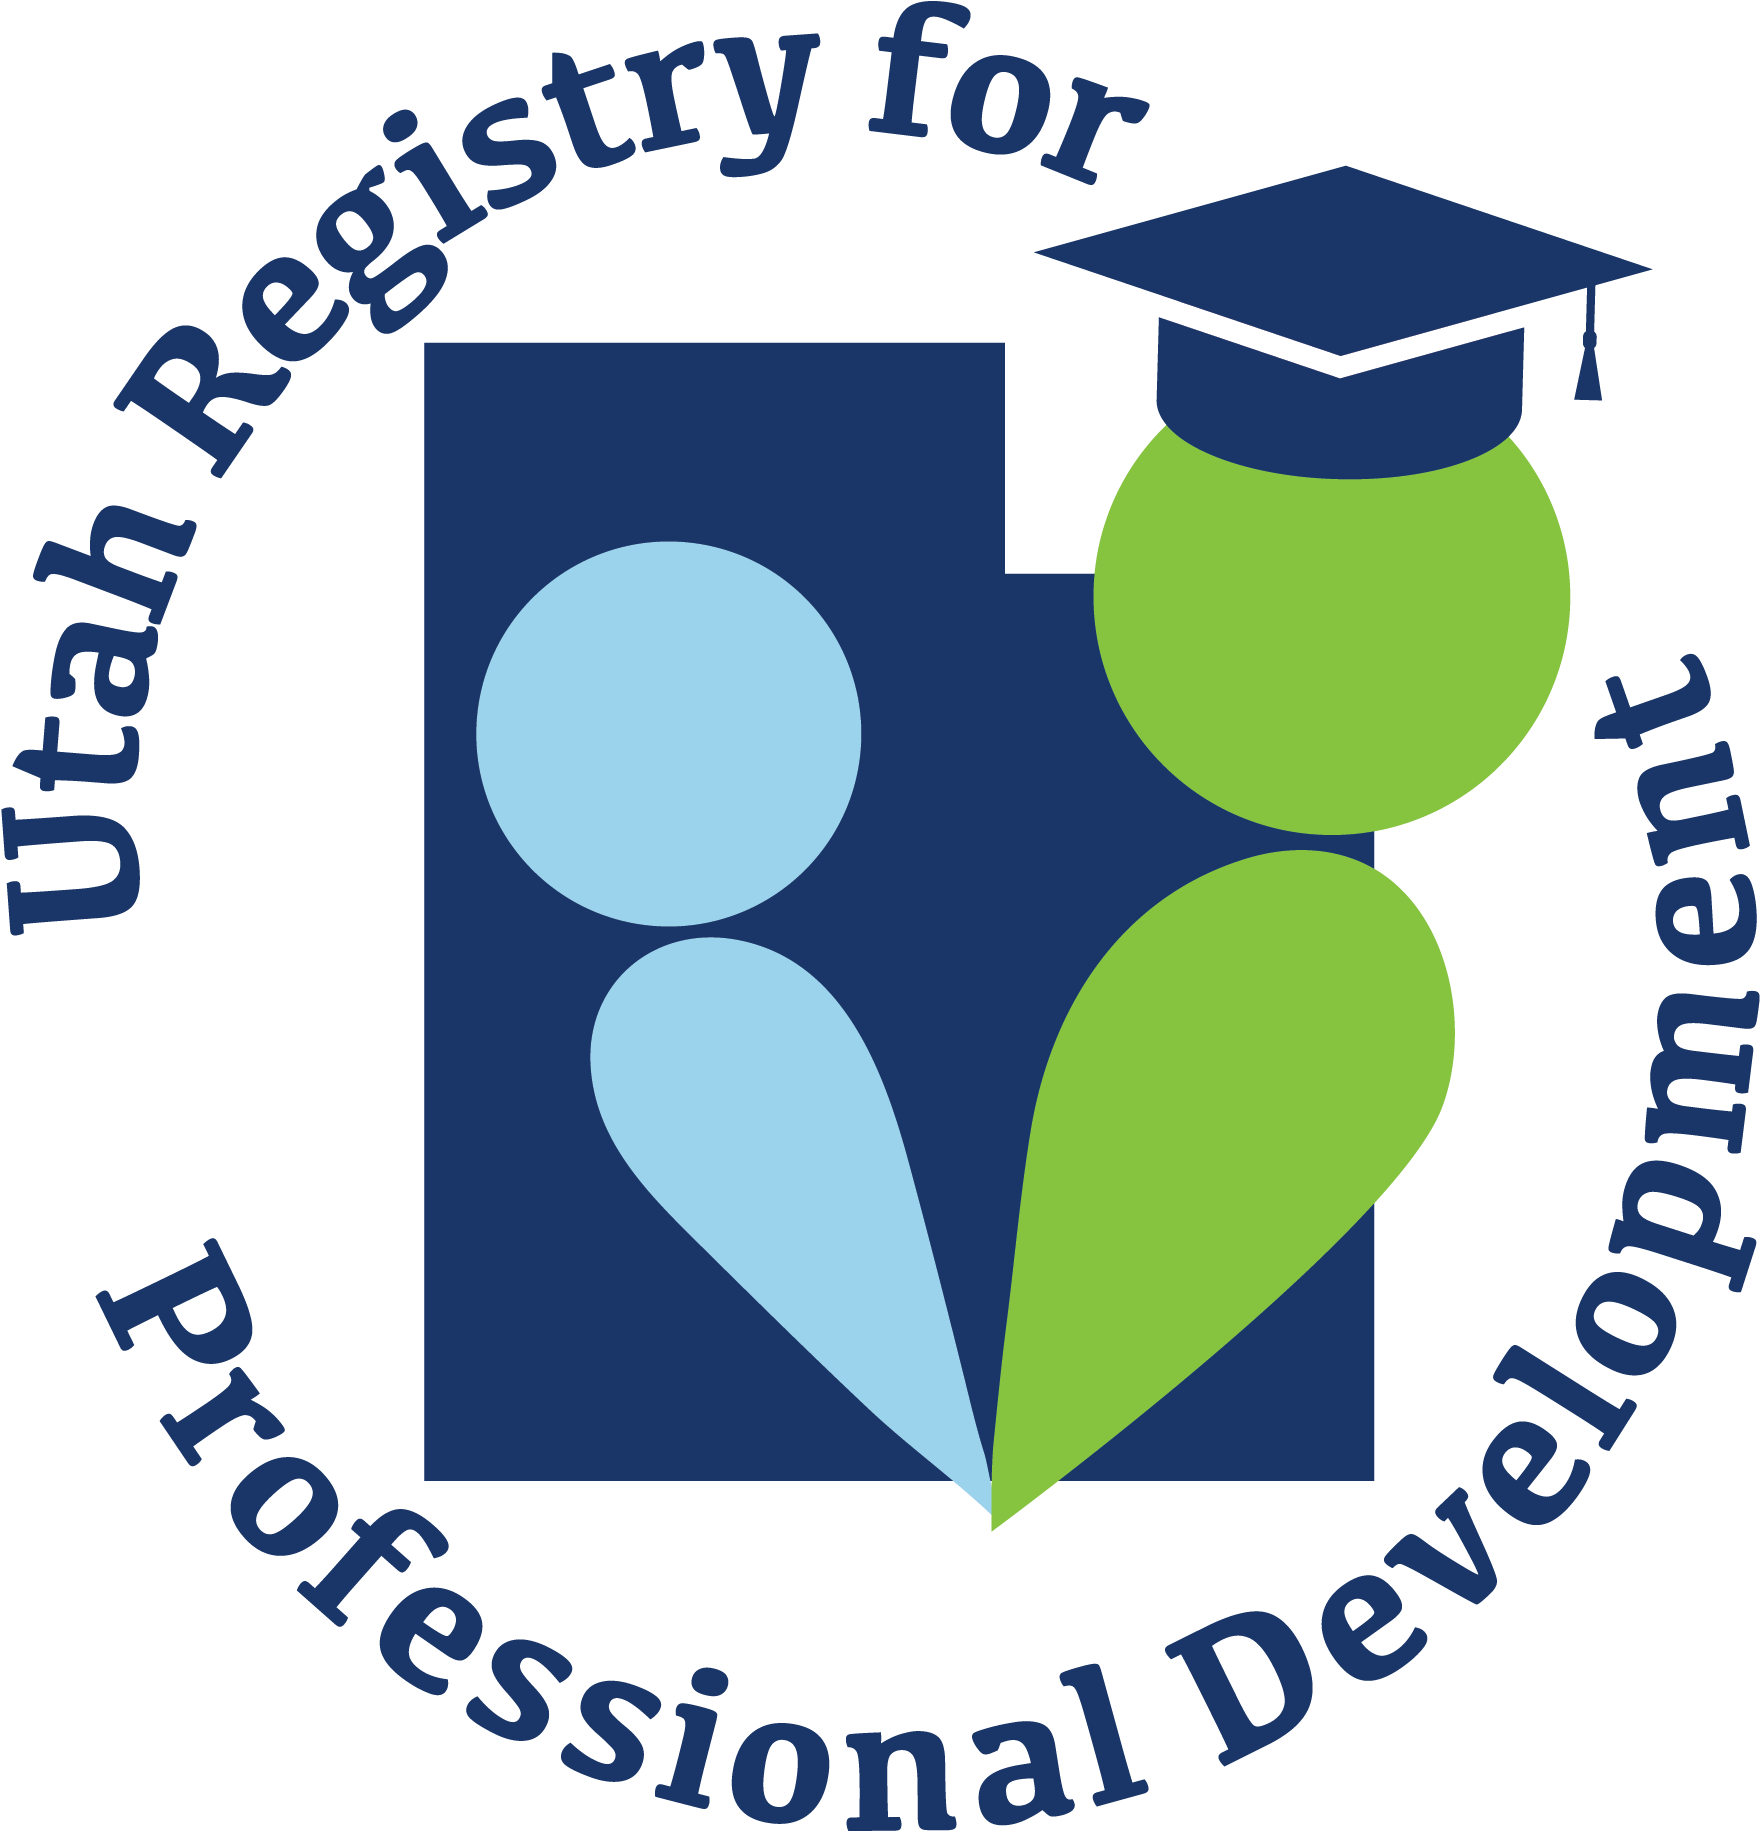 Utah State University Logo Child Care Professional - Utah Valley University (2373x1898)